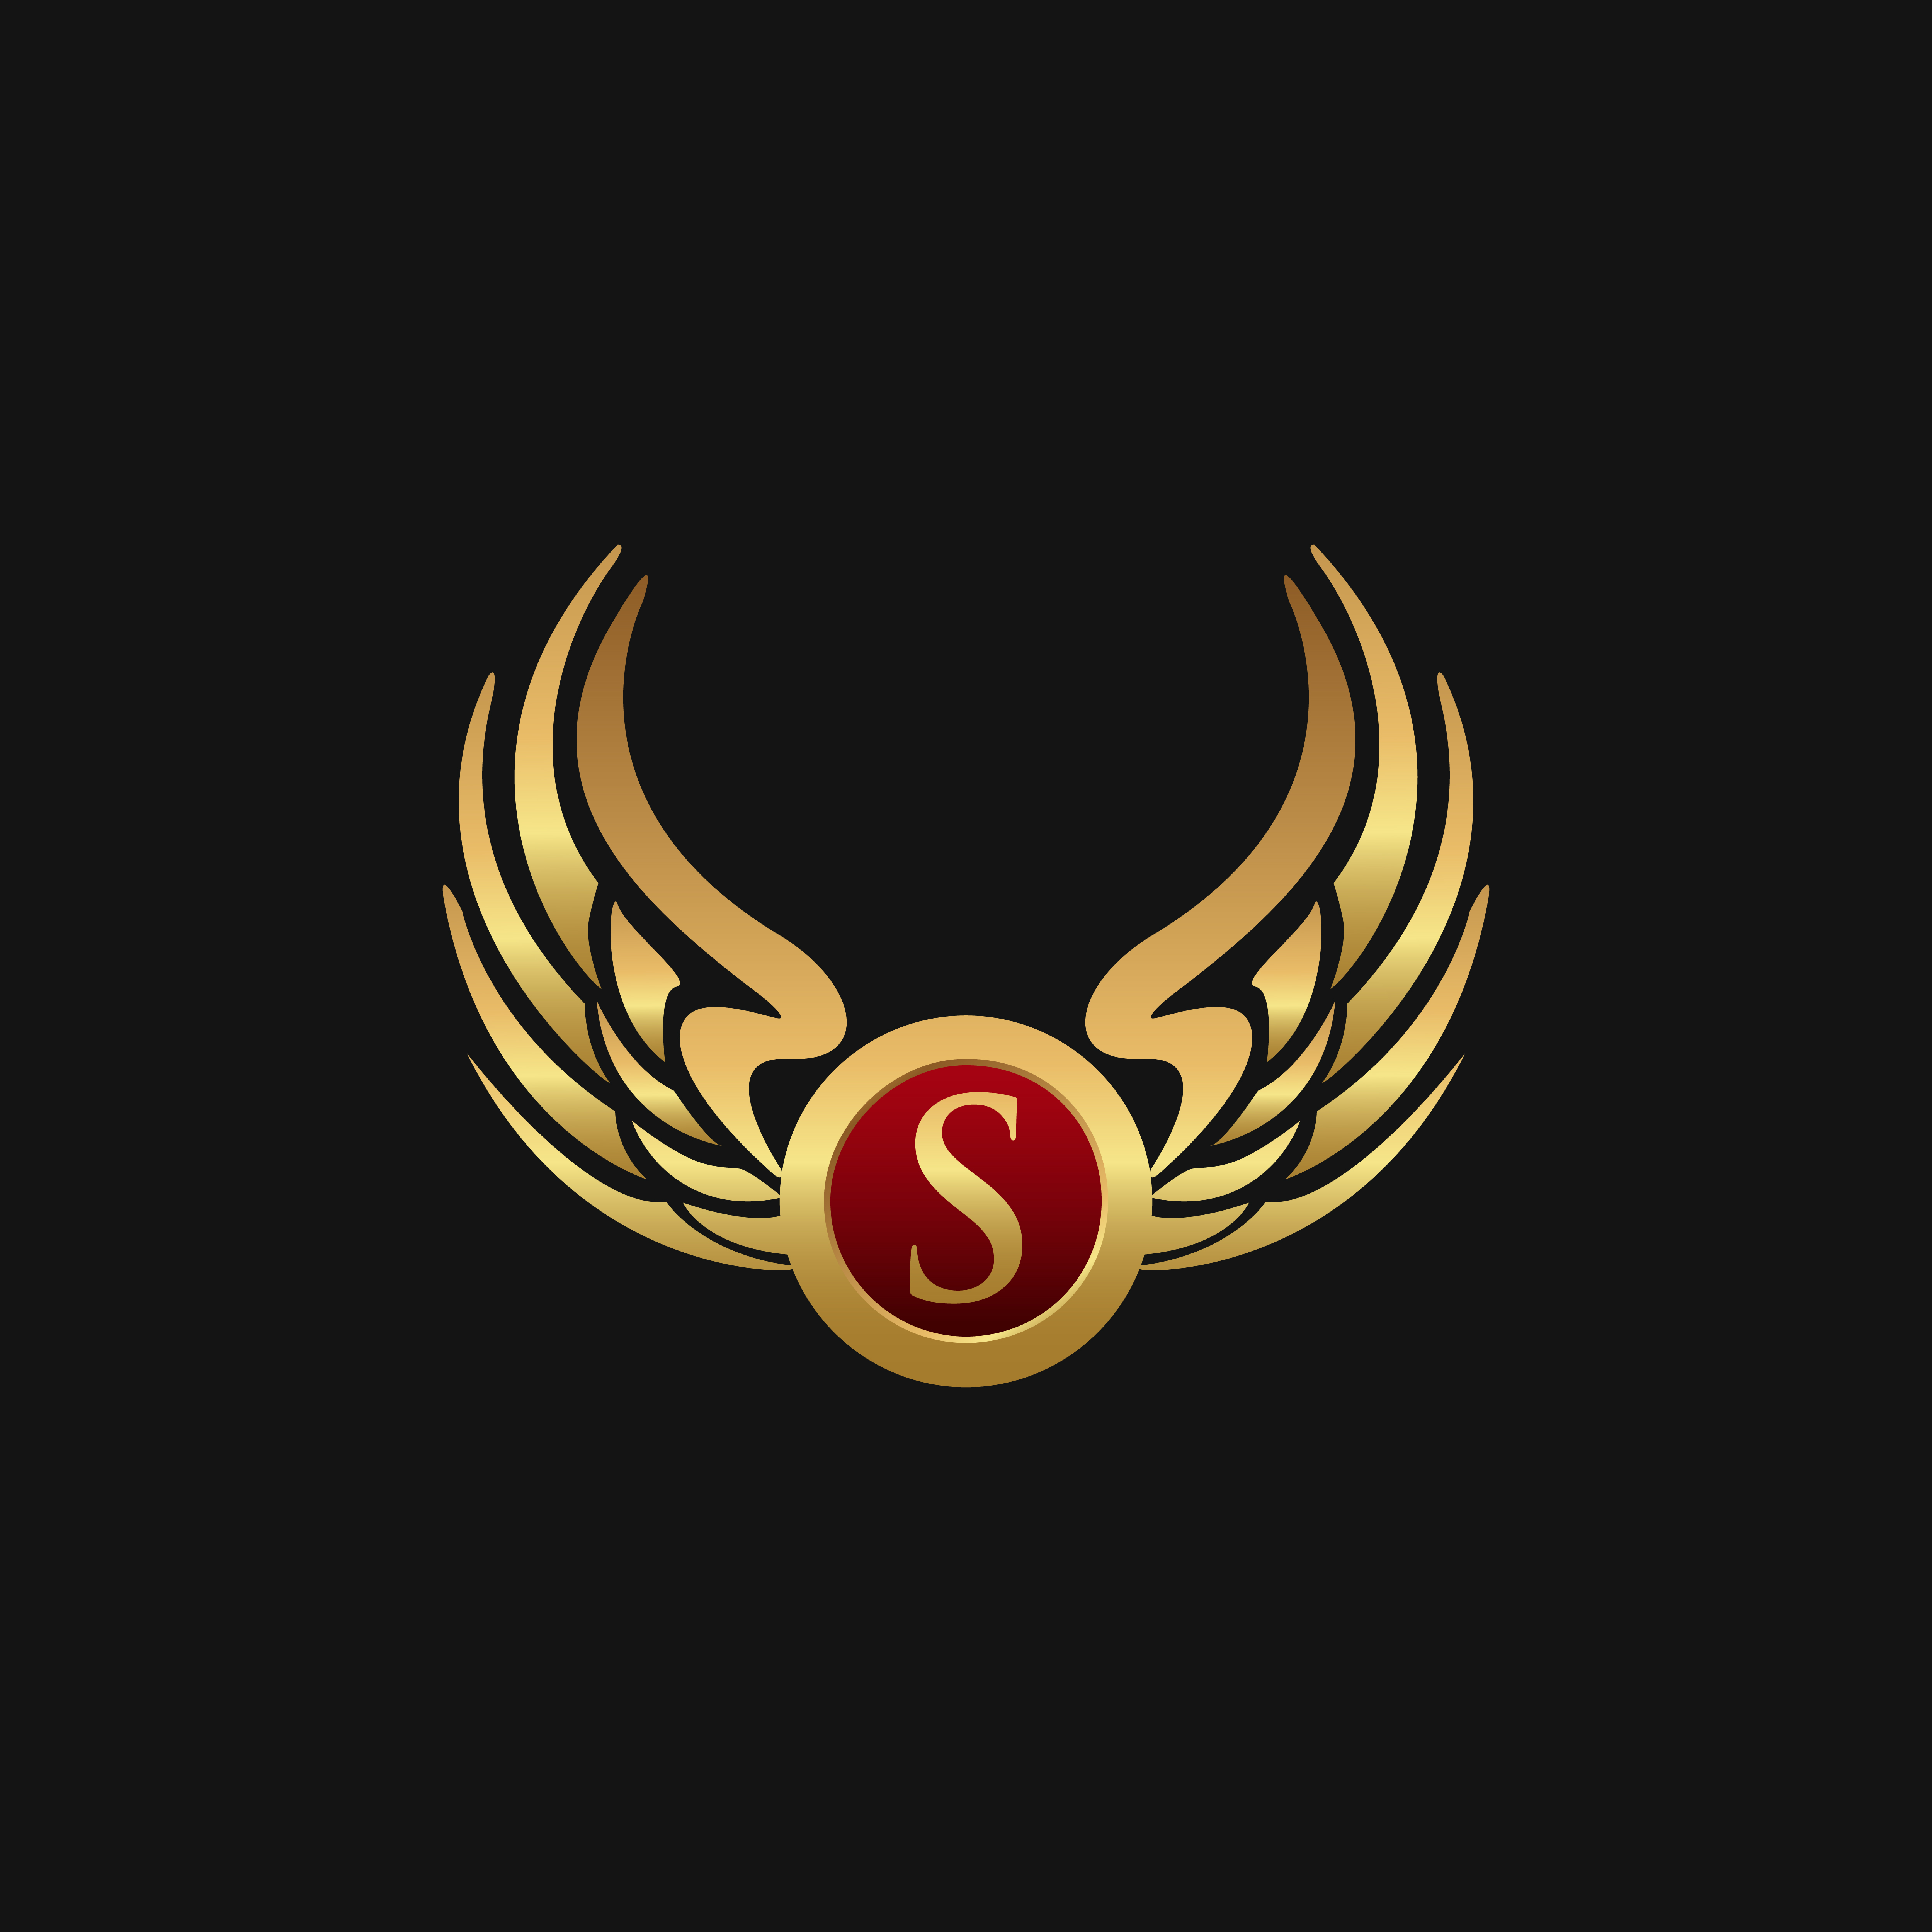 Luxury Letter s Emblem Wings logo design concept template 611453